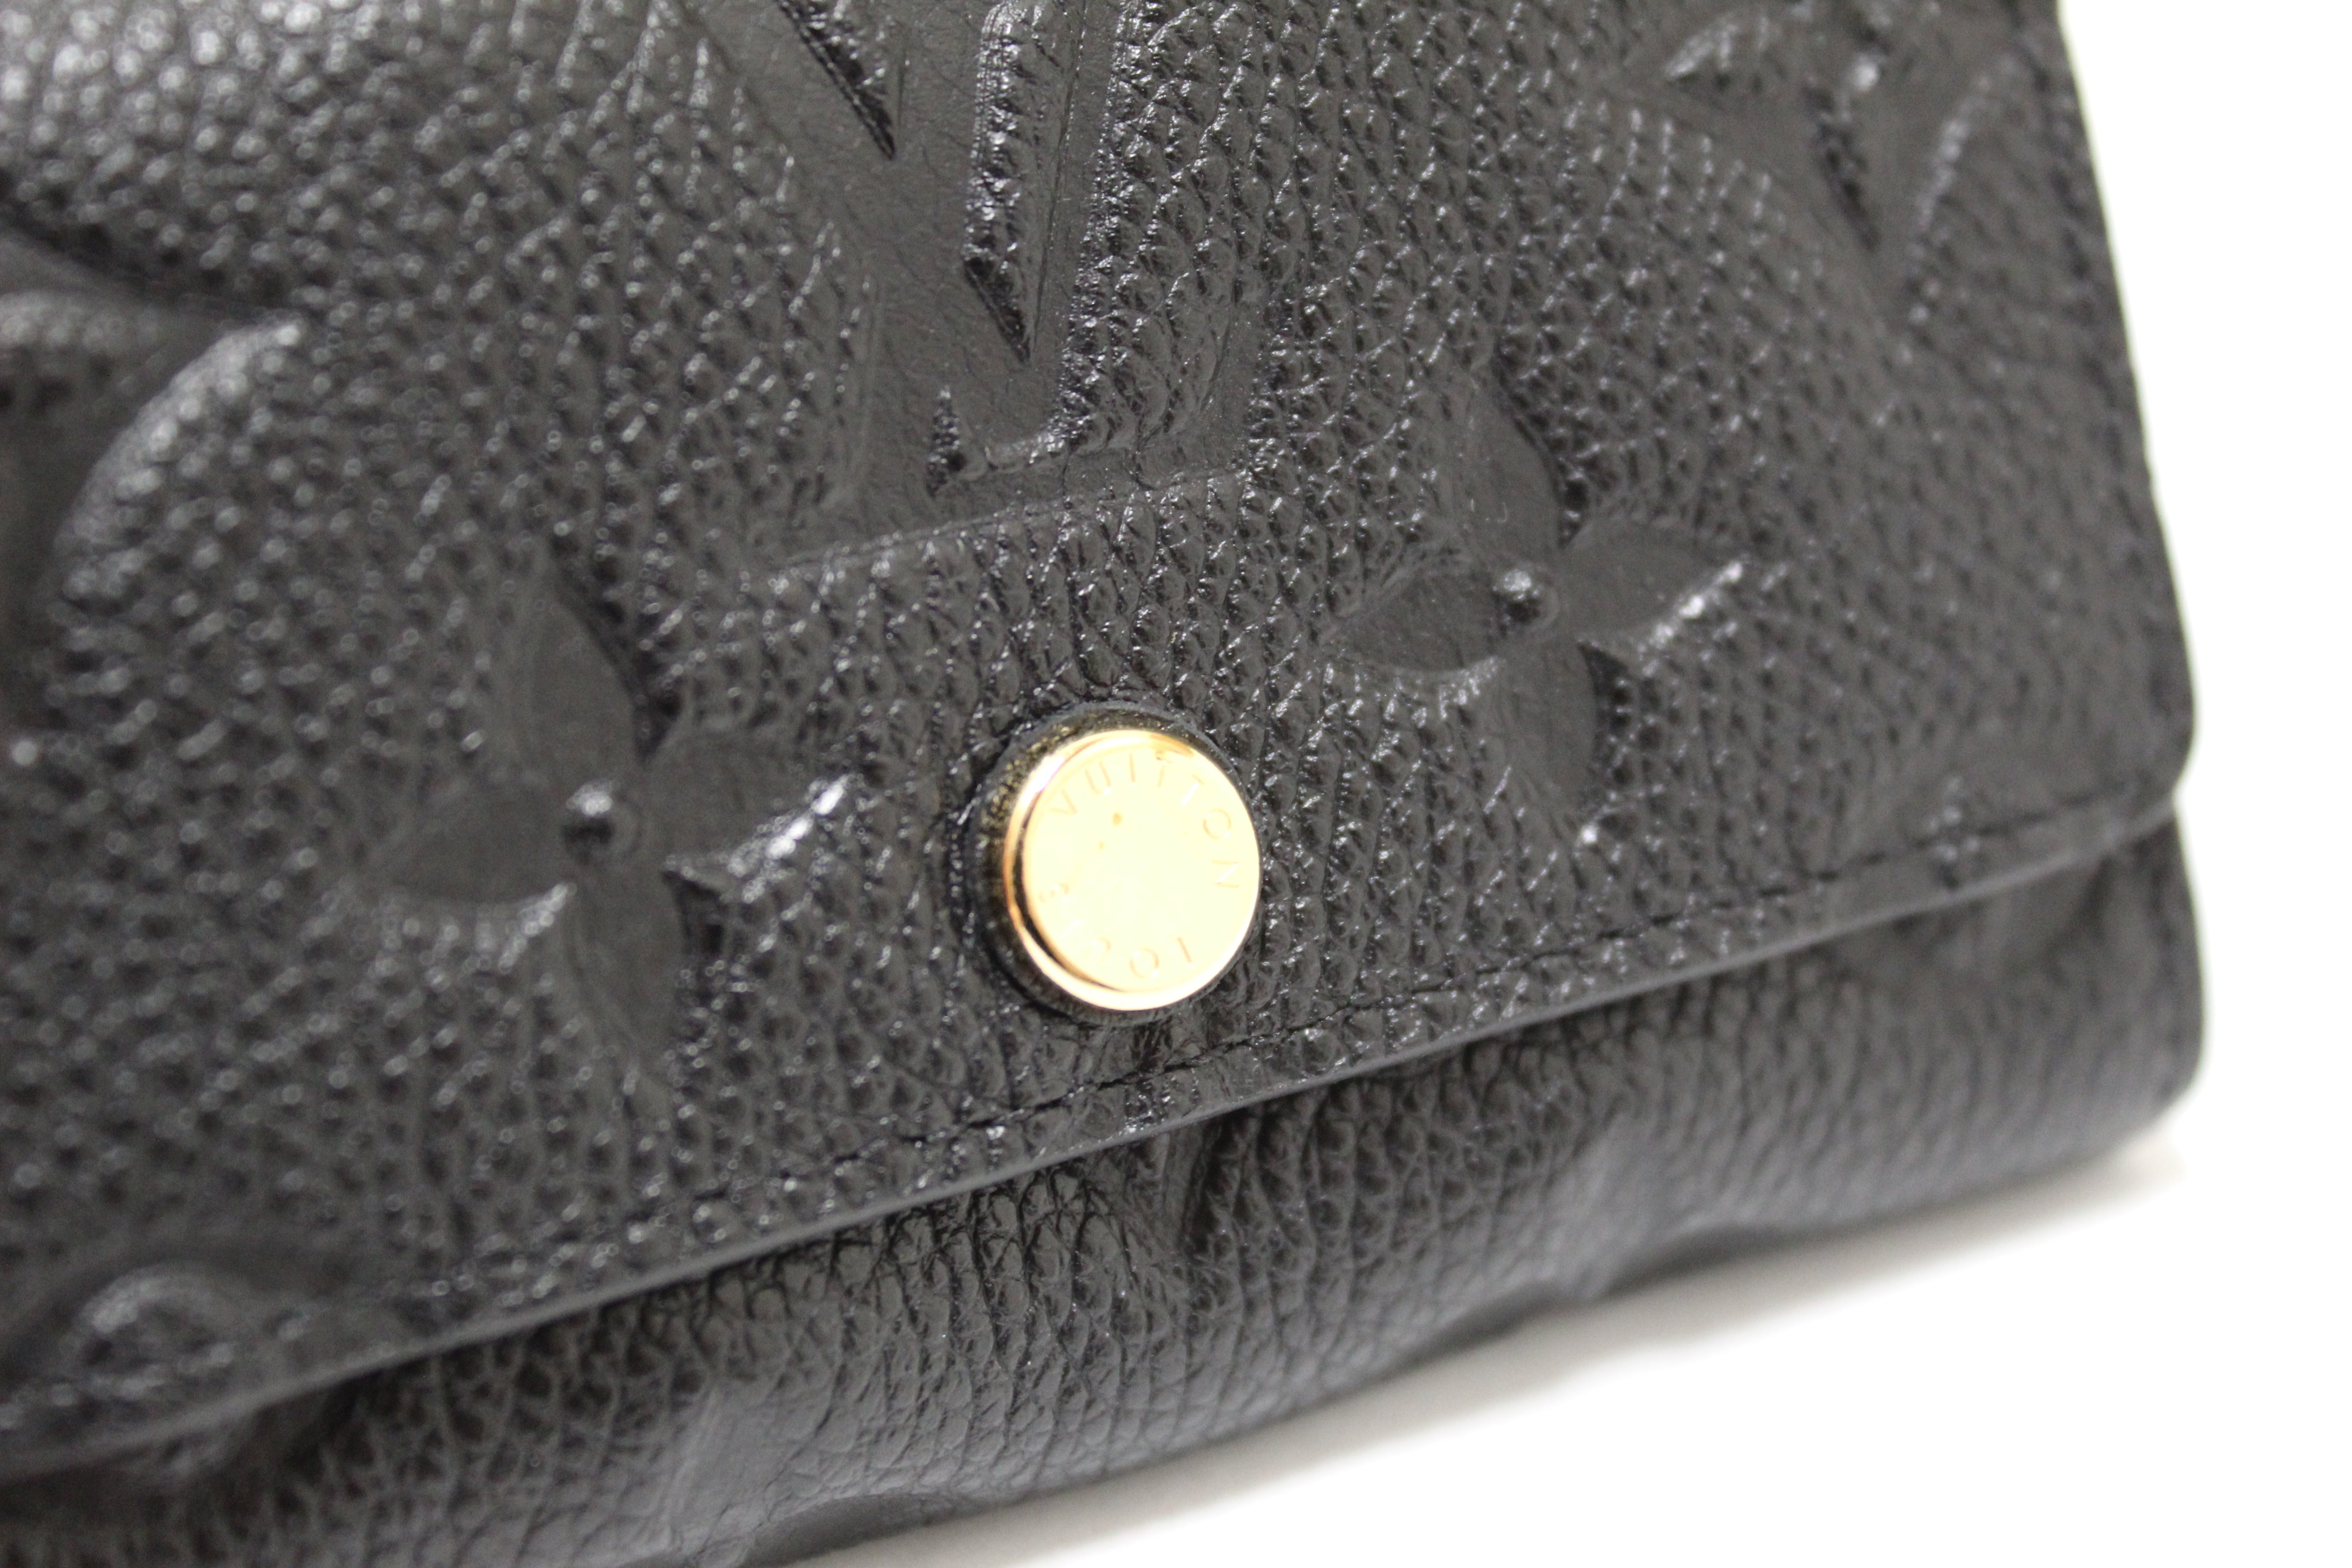 Authentic Louis Vuitton Black Monogram Empreinte Leather 6 Key Holder